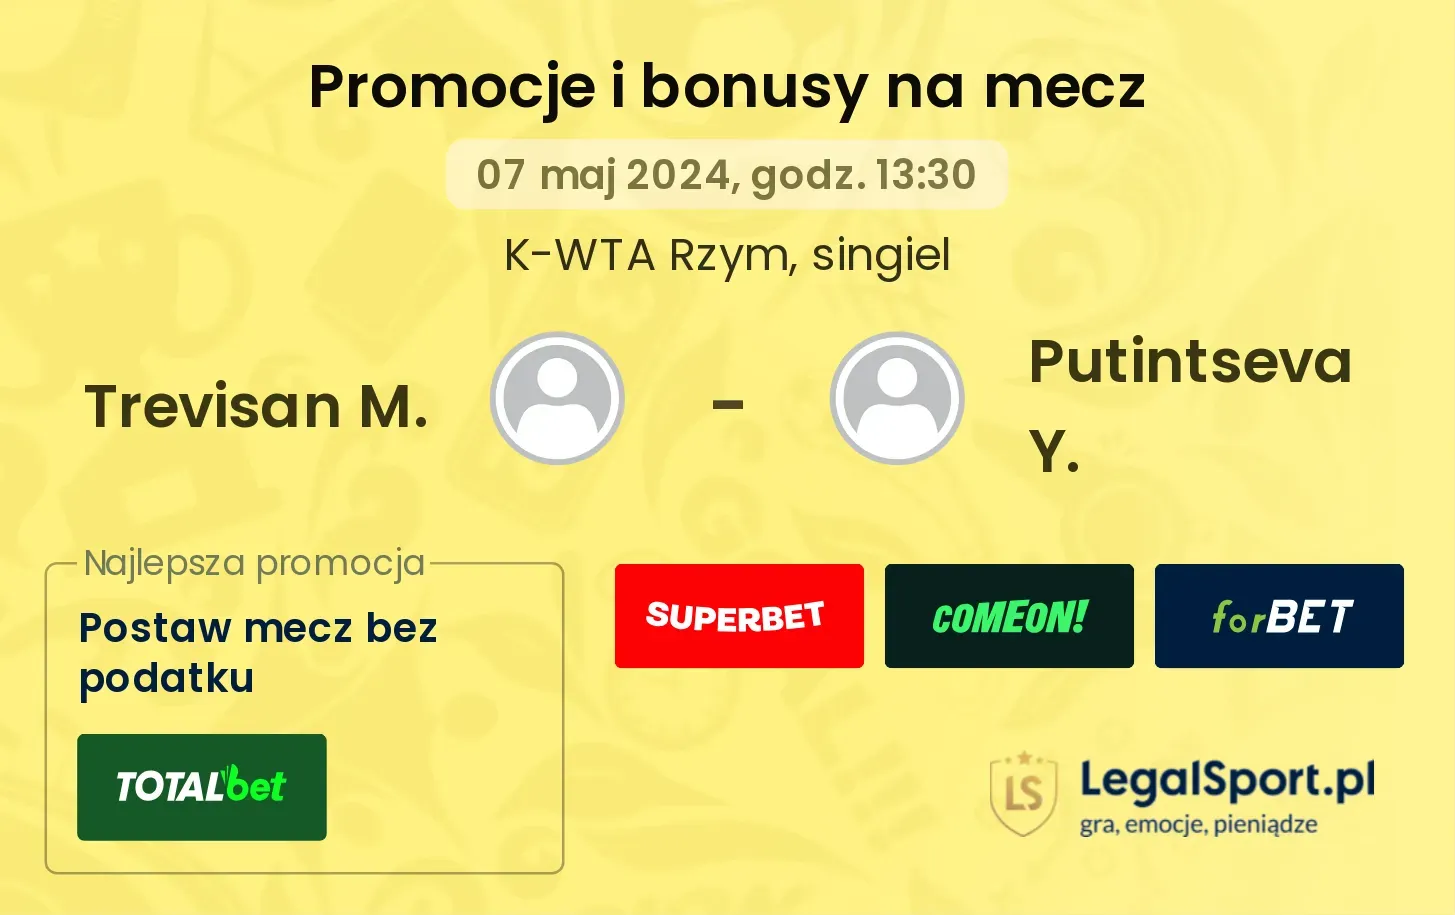 Trevisan M. - Putintseva Y. promocje bonusy na mecz